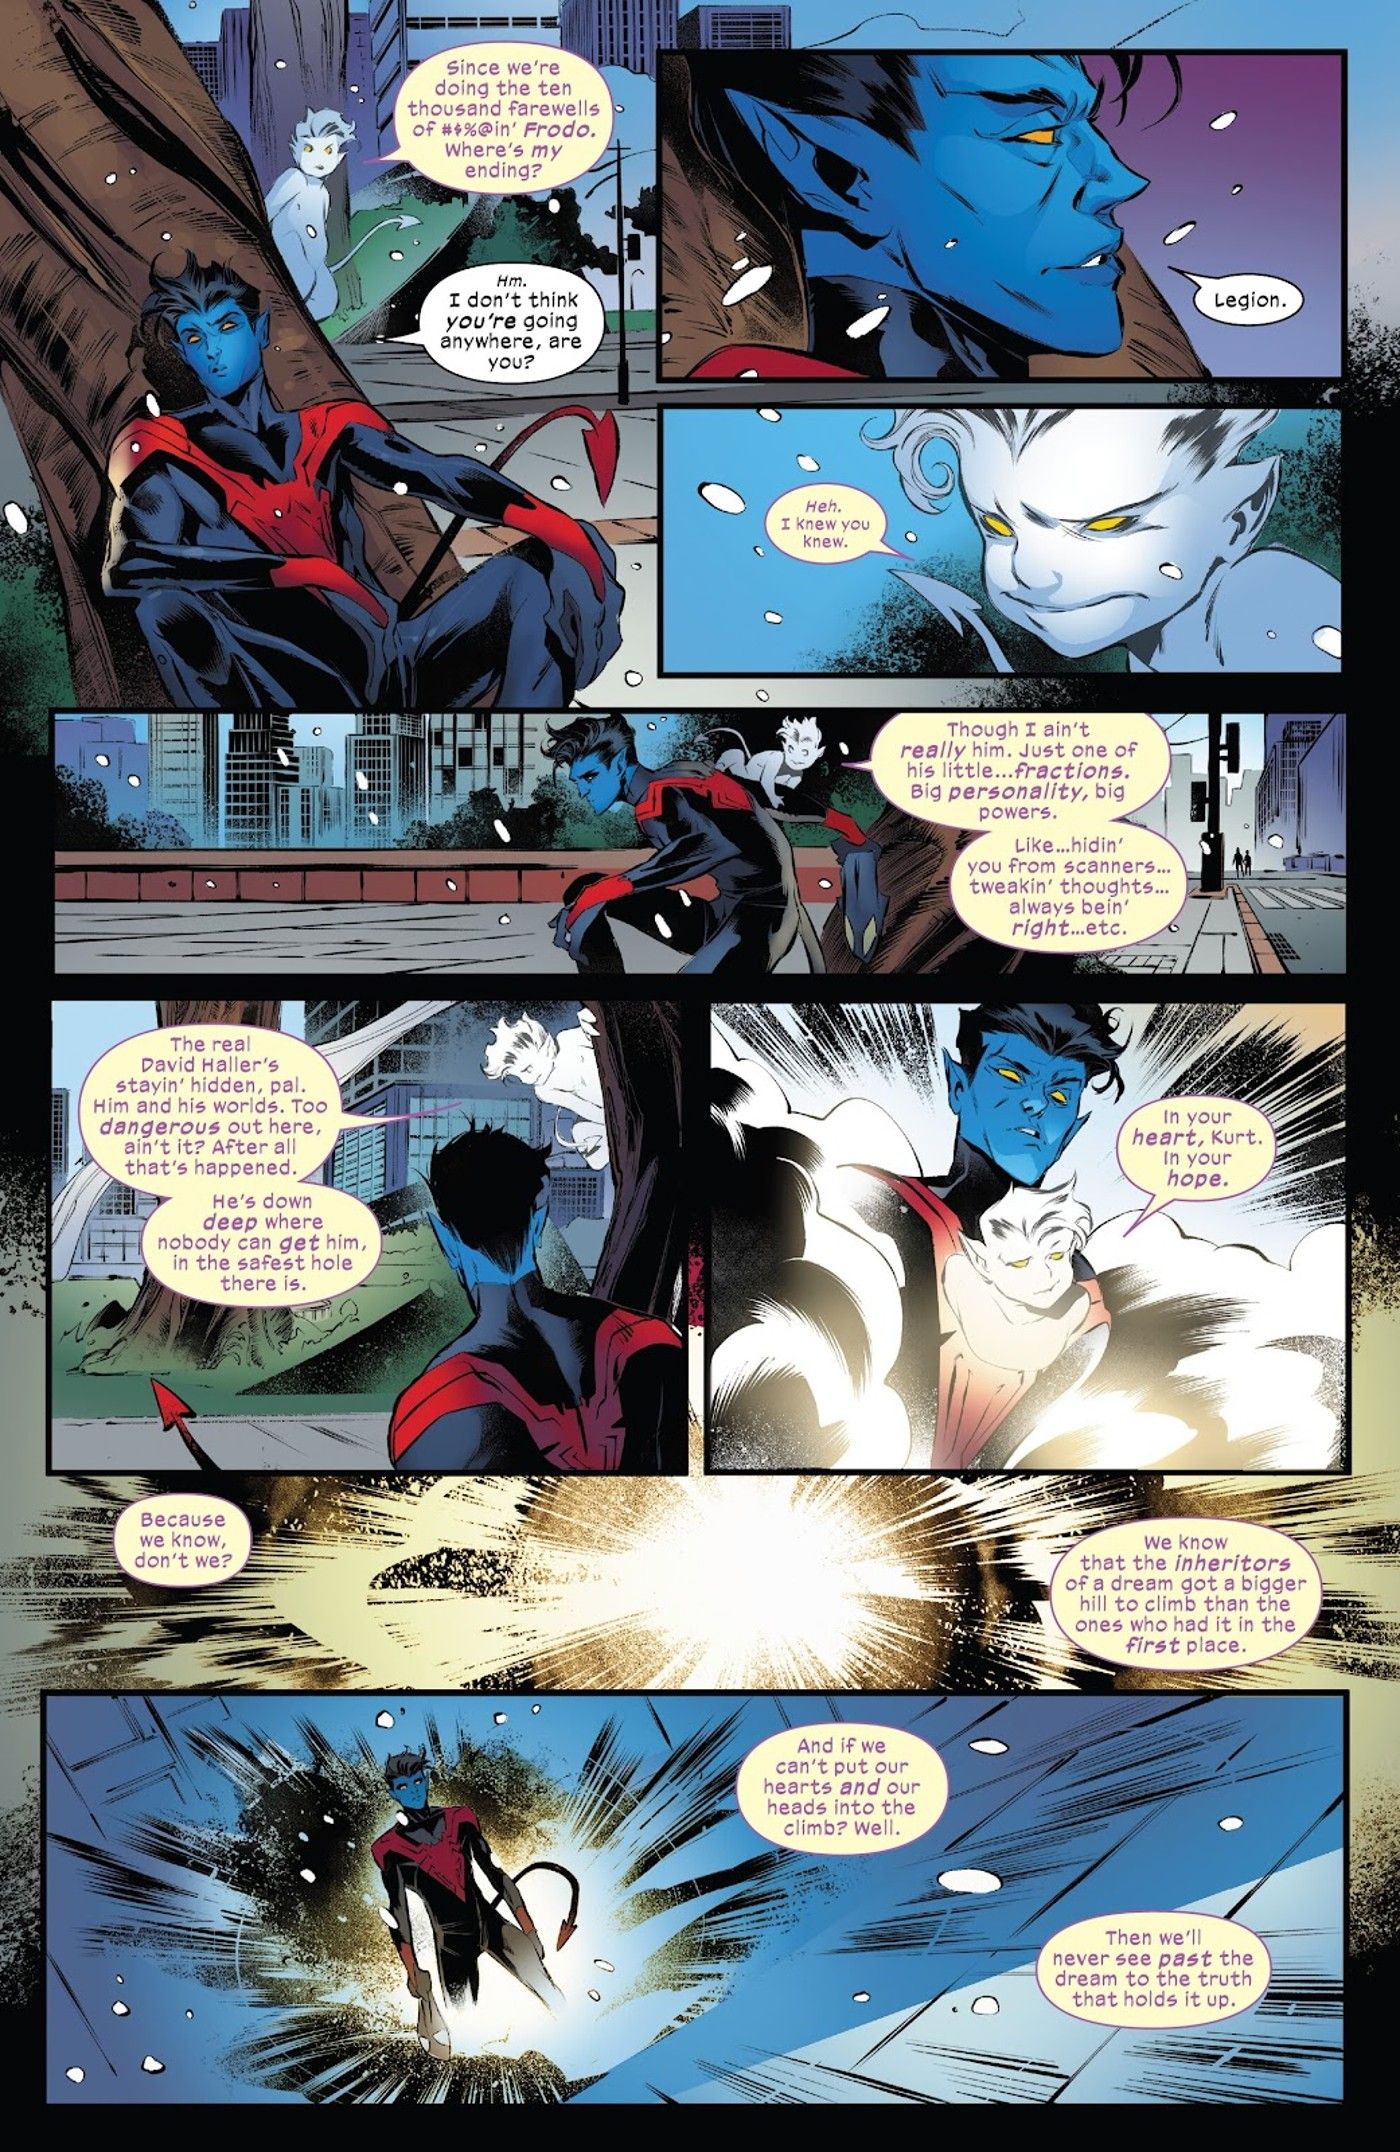 Uncanny Spider-Man #5 Legion reveals Nightcrawler's word of hope